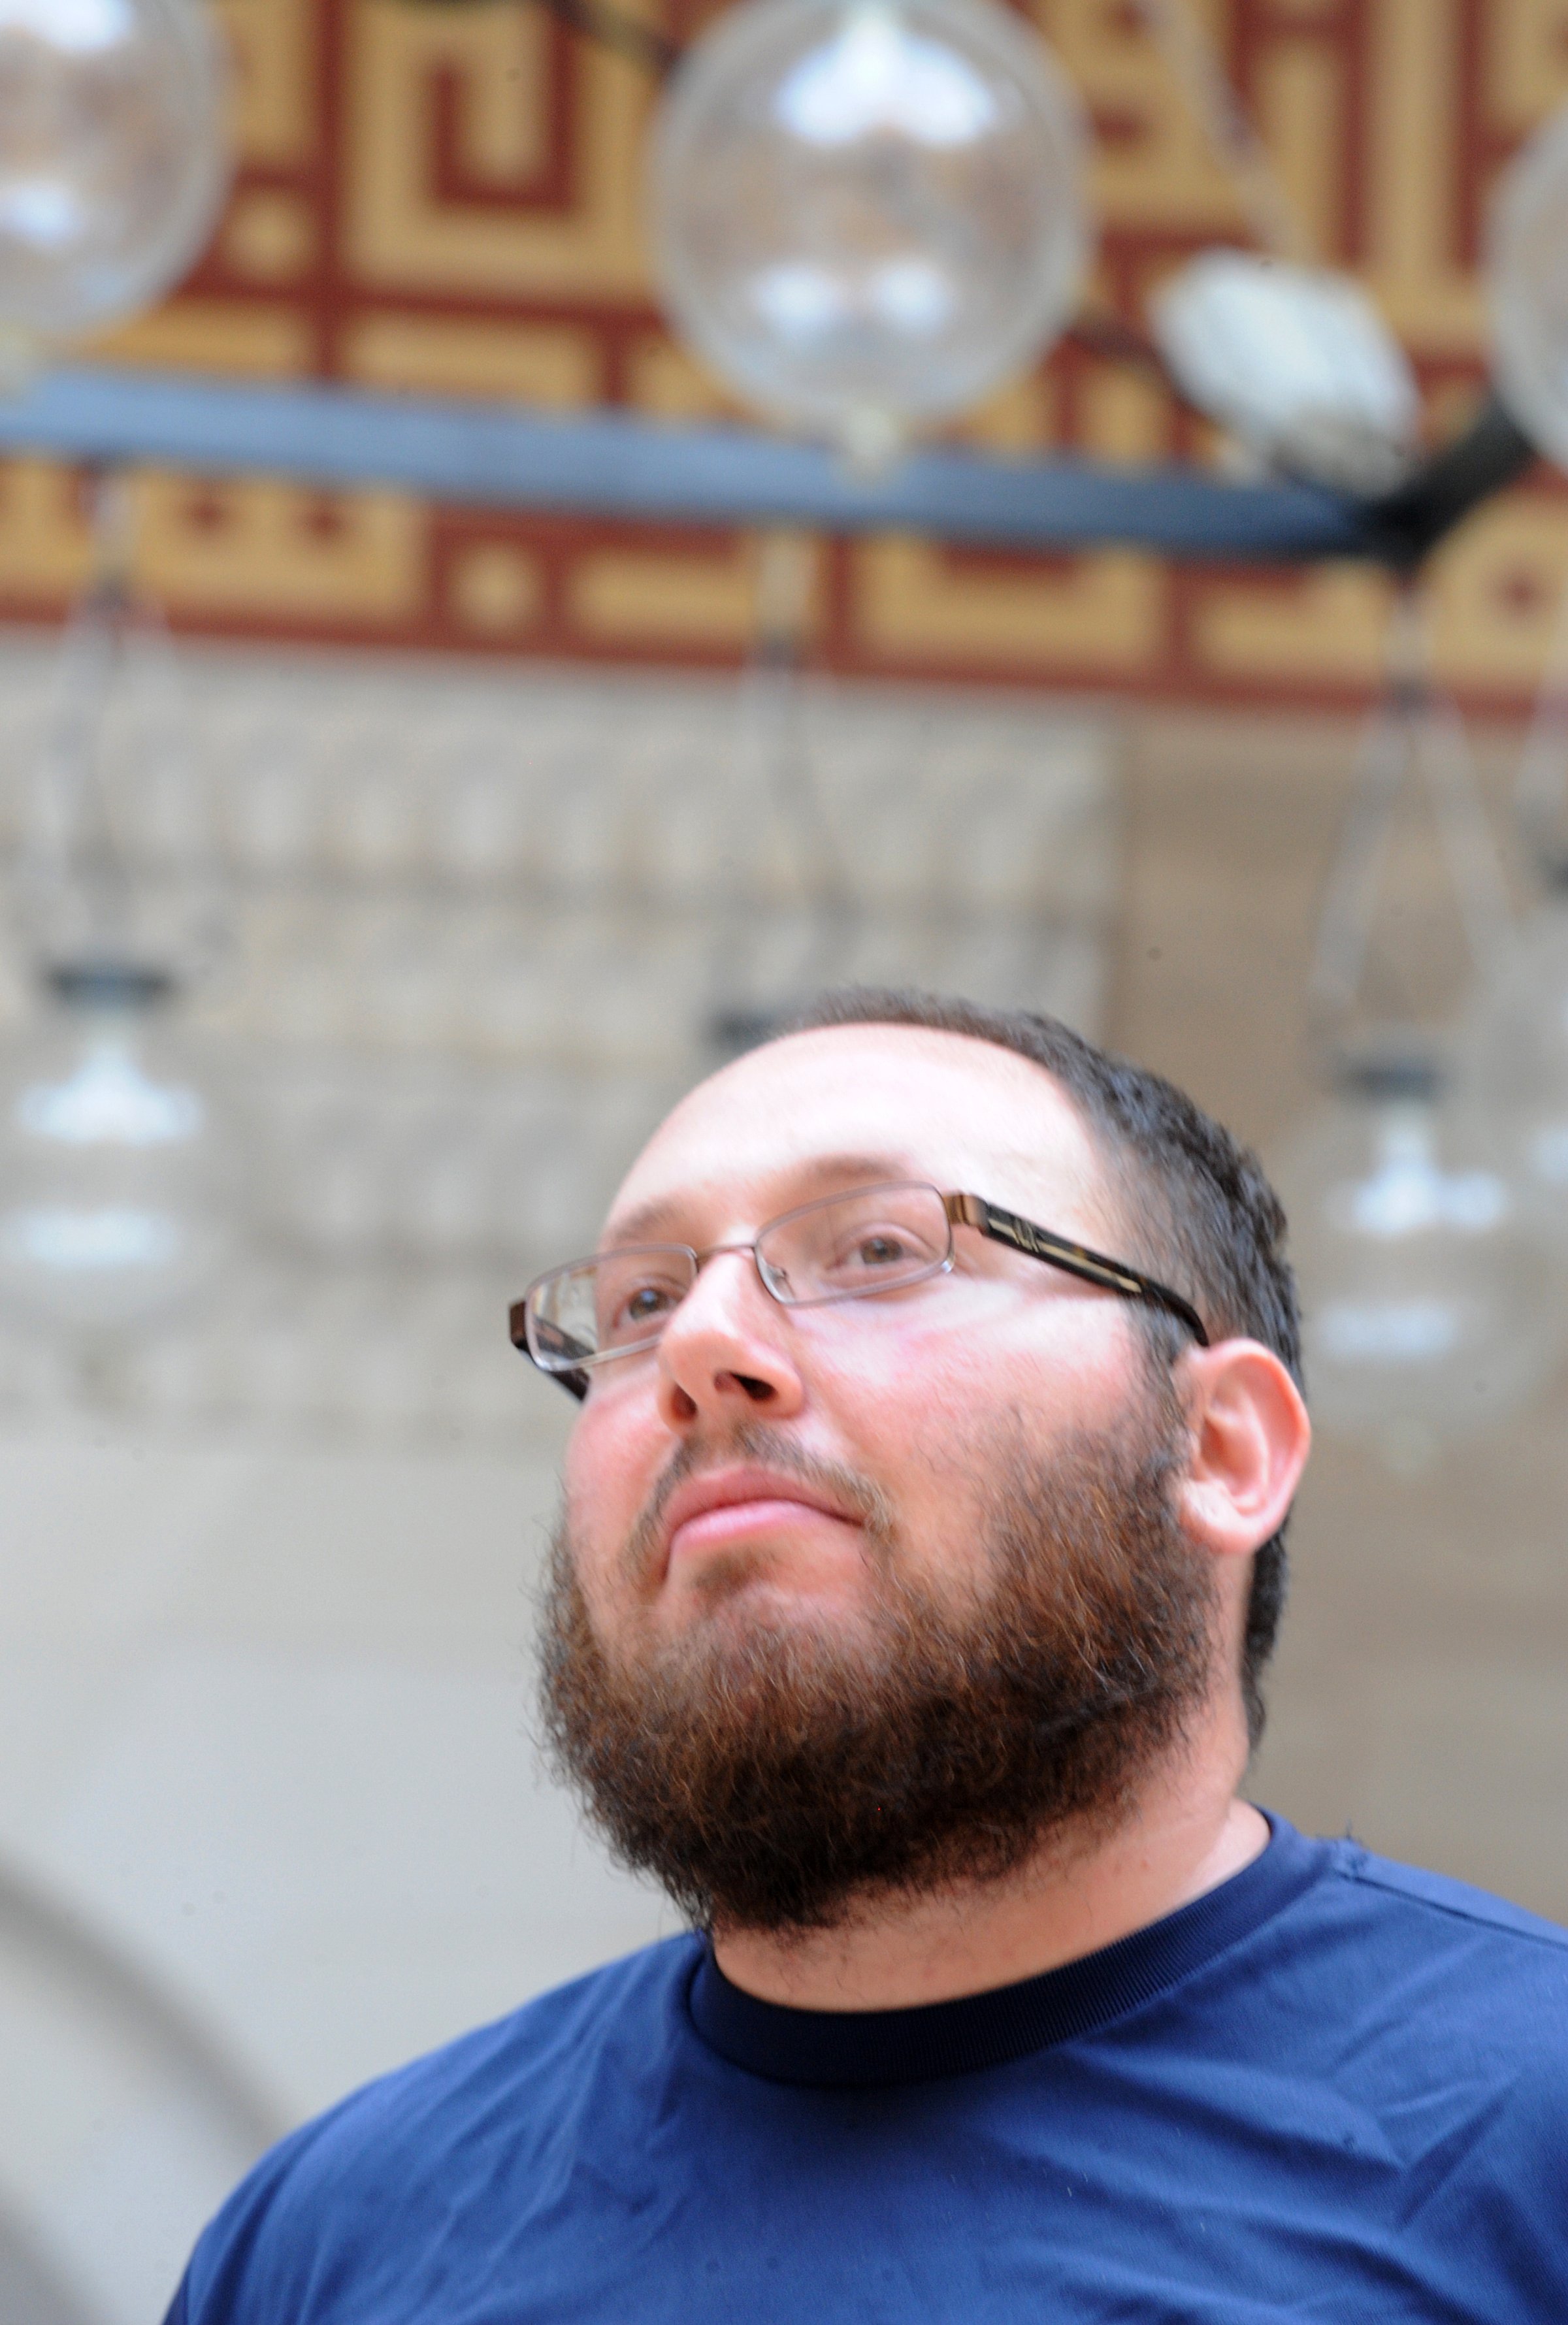 Freelance journalist Steven Sotloff during a work trip inside Al-Fateh Mosque in Manama, Bahrain on October 26, 2010.